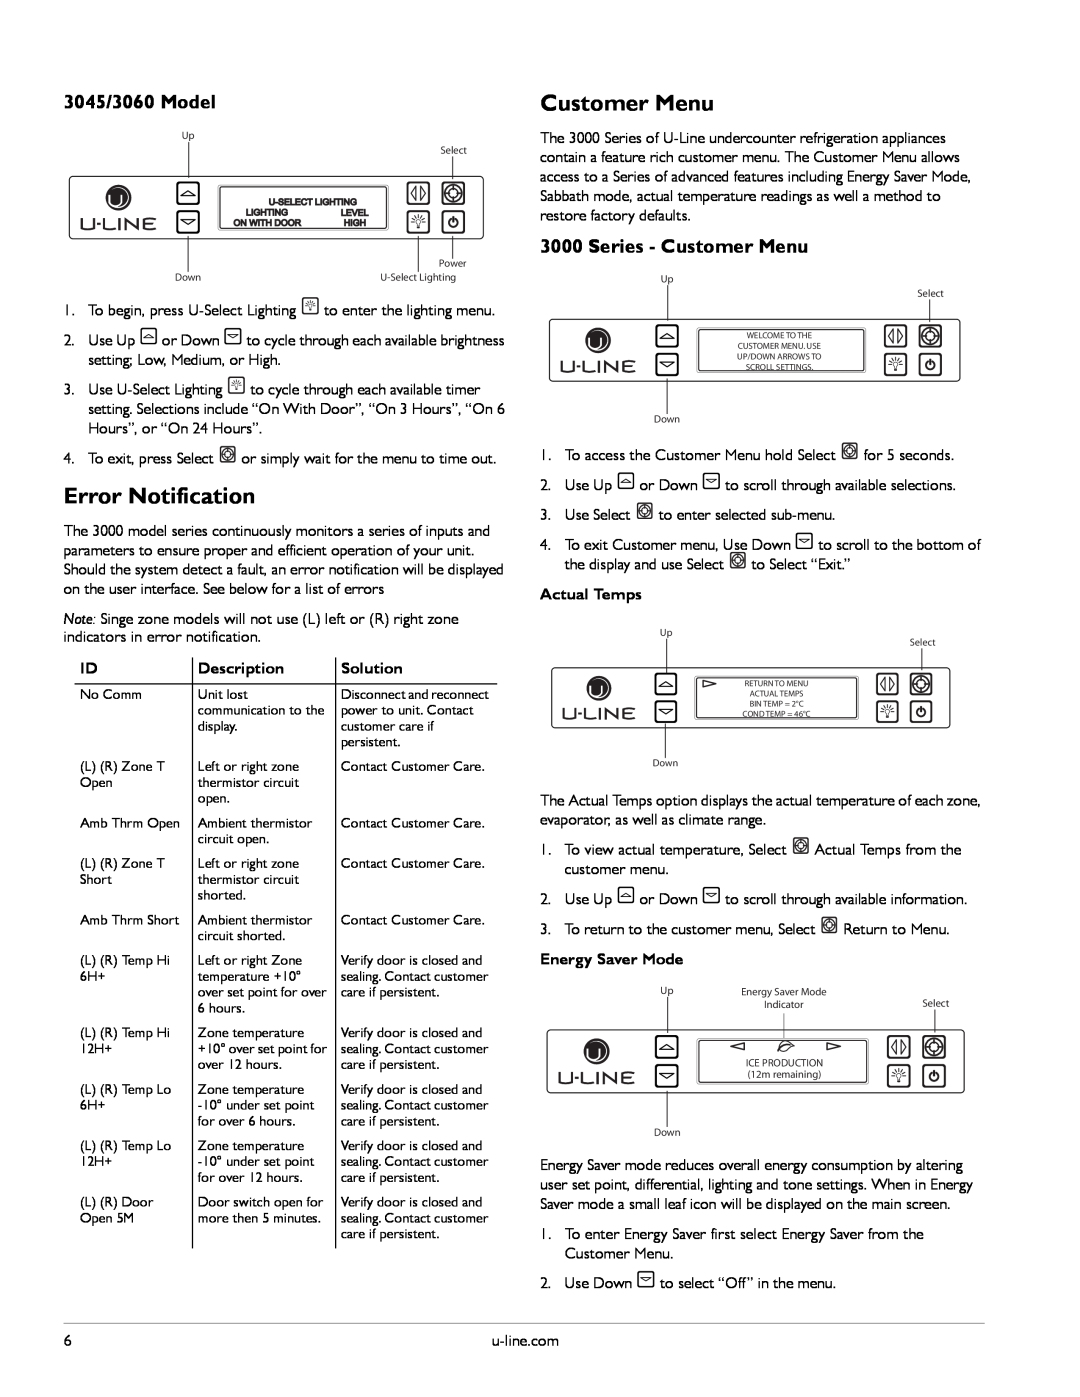 U-Line U-3045RFS-01 Error Notification, 3045/3060 Model, Series - Customer Menu, Description, Solution, Actual Temps 